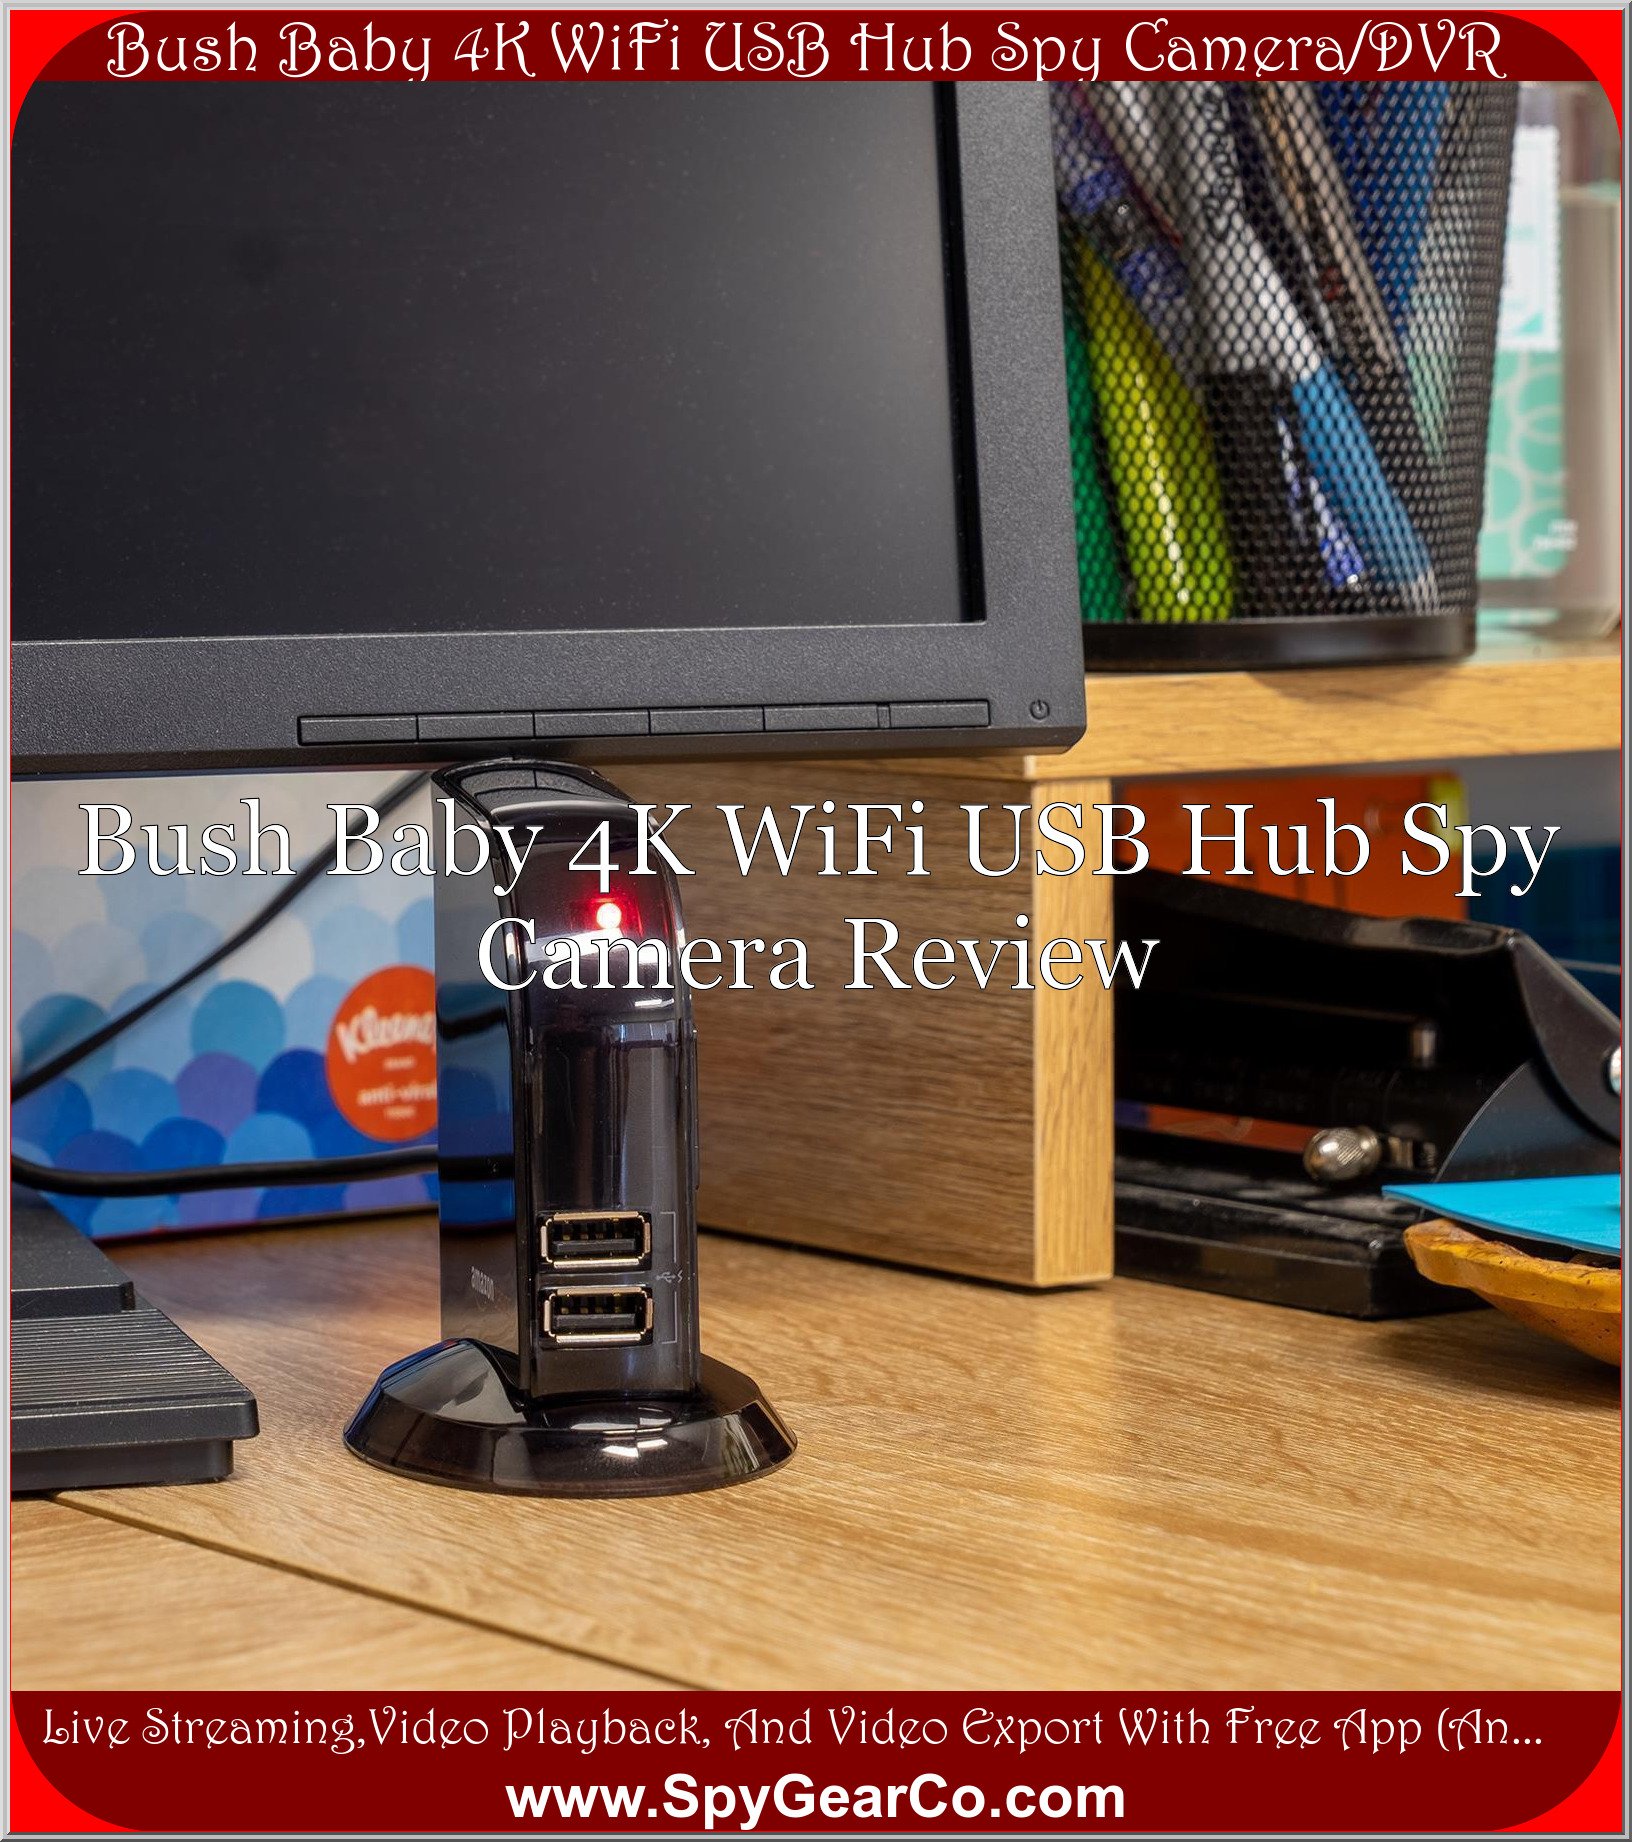 Bush Baby 4K WiFi USB Hub Spy Camera/DVR